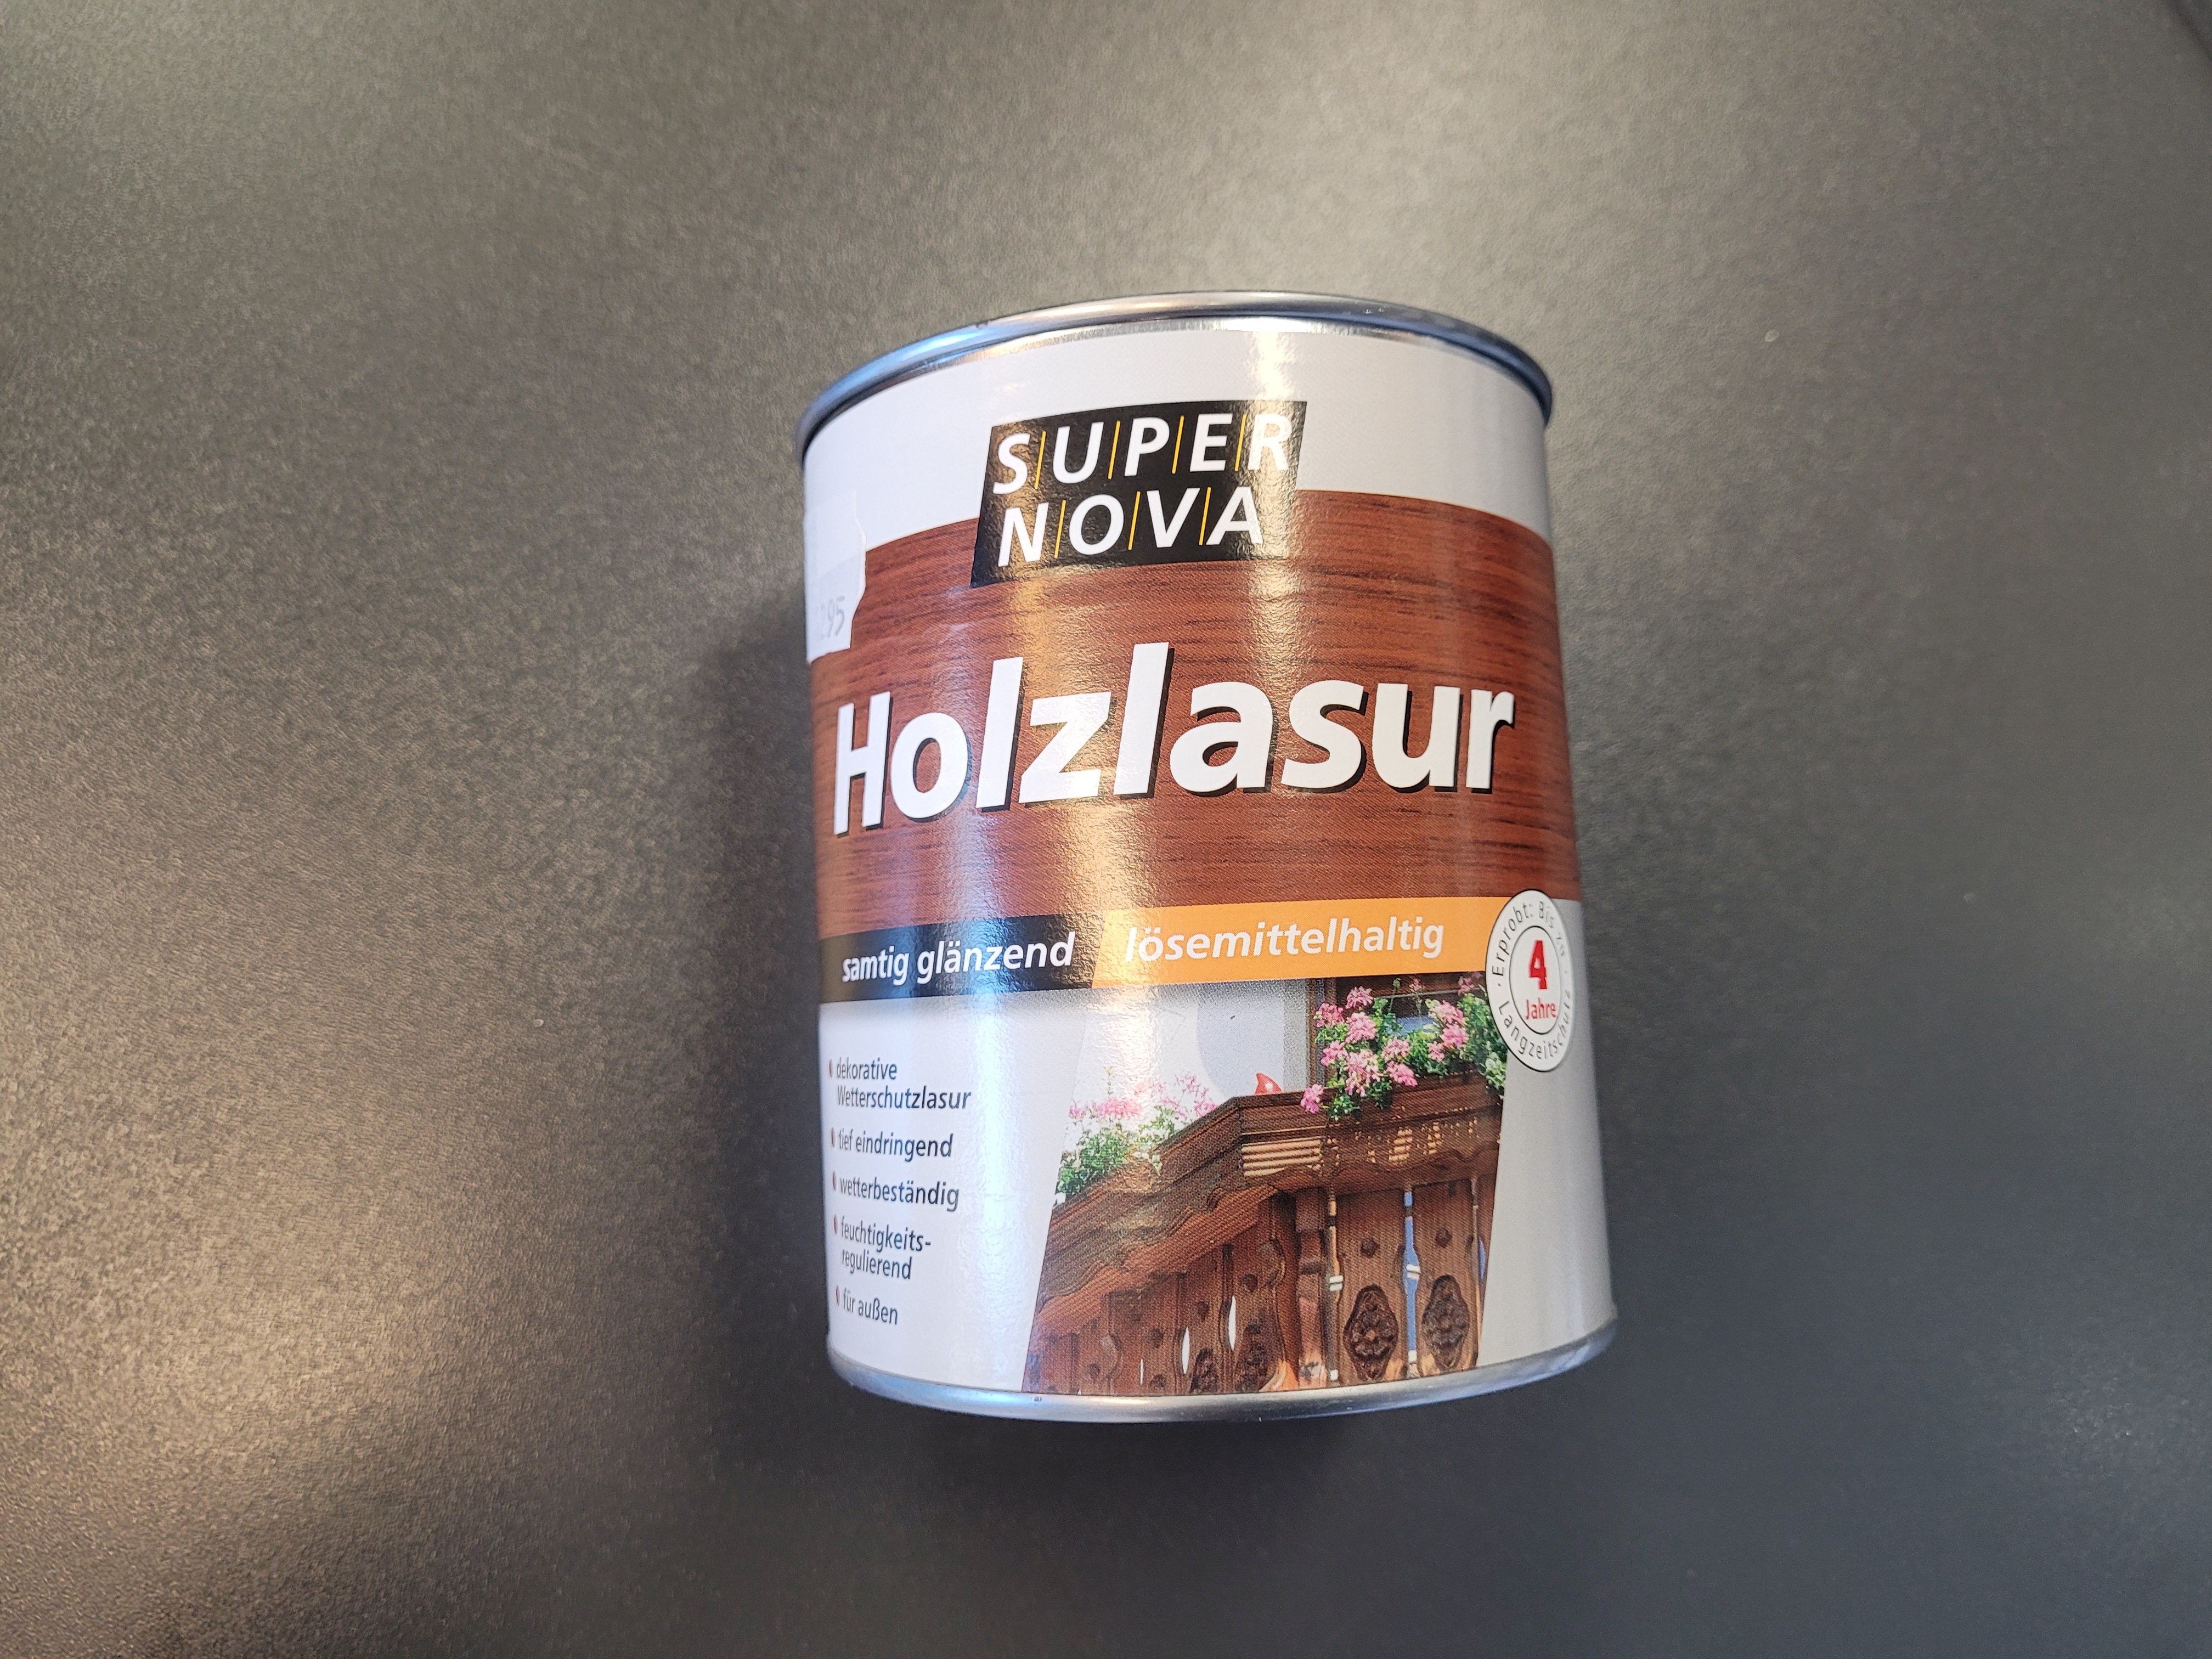 Super Nova Holzlasur  0,75 ltr. - 12,95 €   2,5 ltr. - 35,95 €